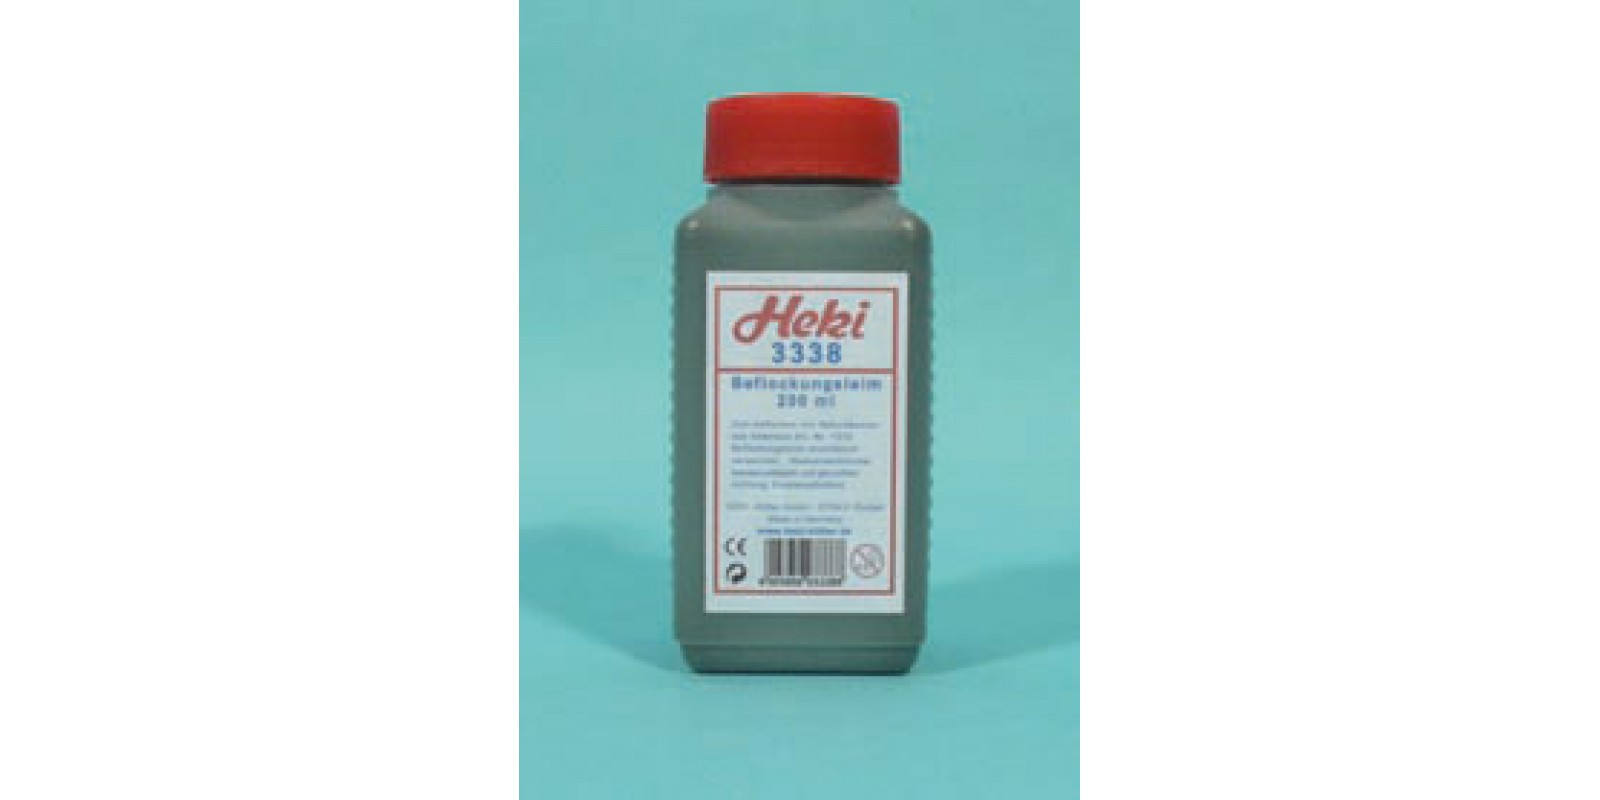 He3338 / Beflockungsleim für Naturbäume 200 ml